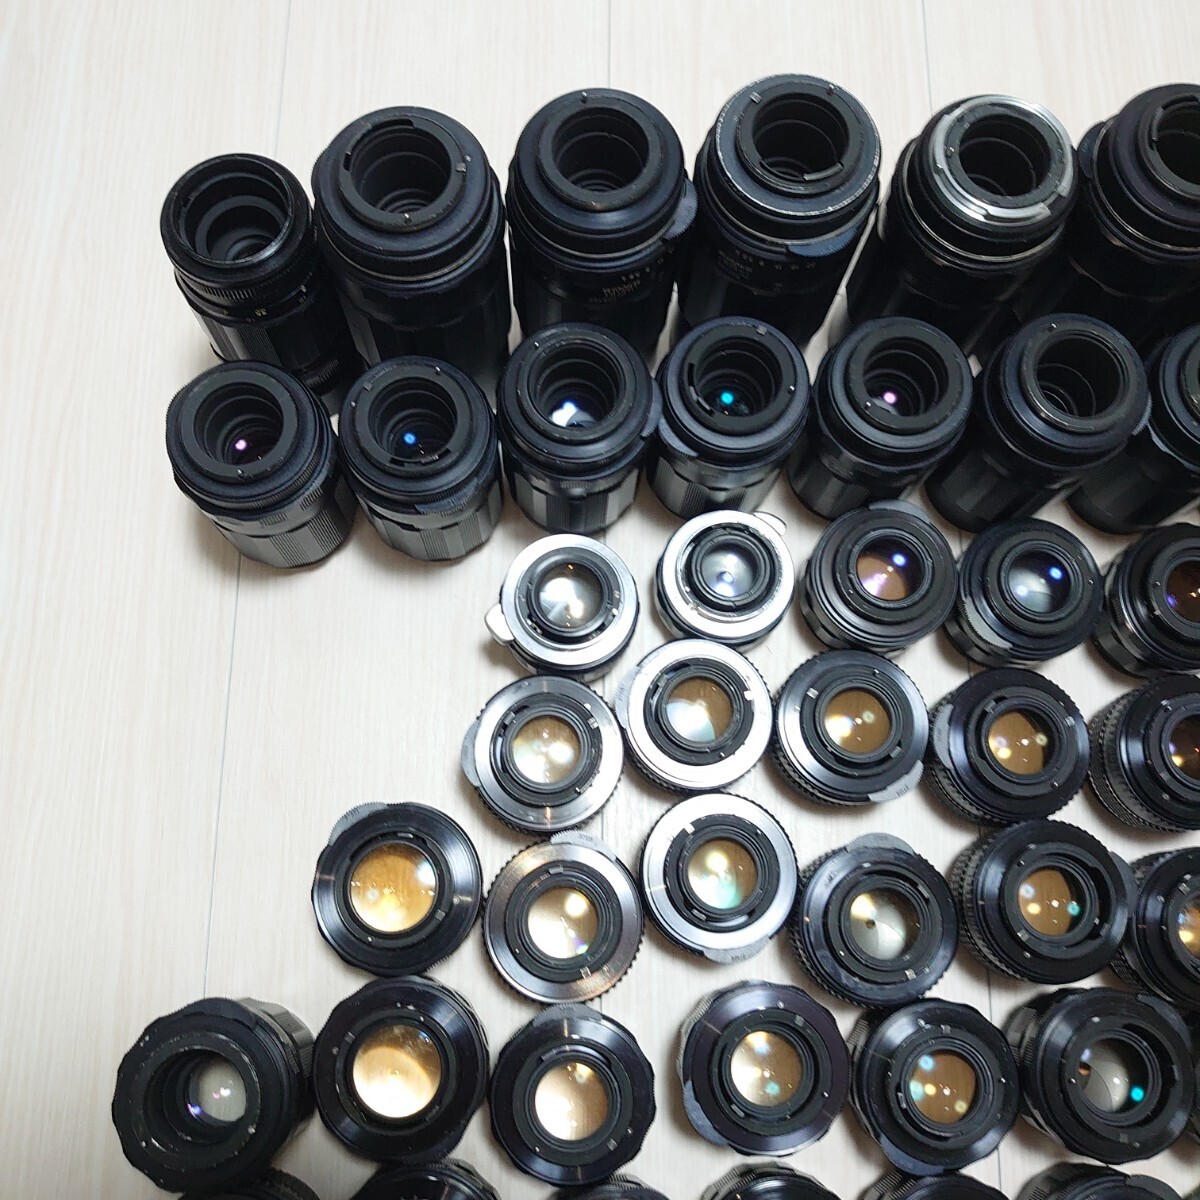 Pentax super takumar スーパータクマー 75本 単焦点レンズ 標準レンズ 望遠レンズ 引越しのためカメラ用品色々出品中の画像8